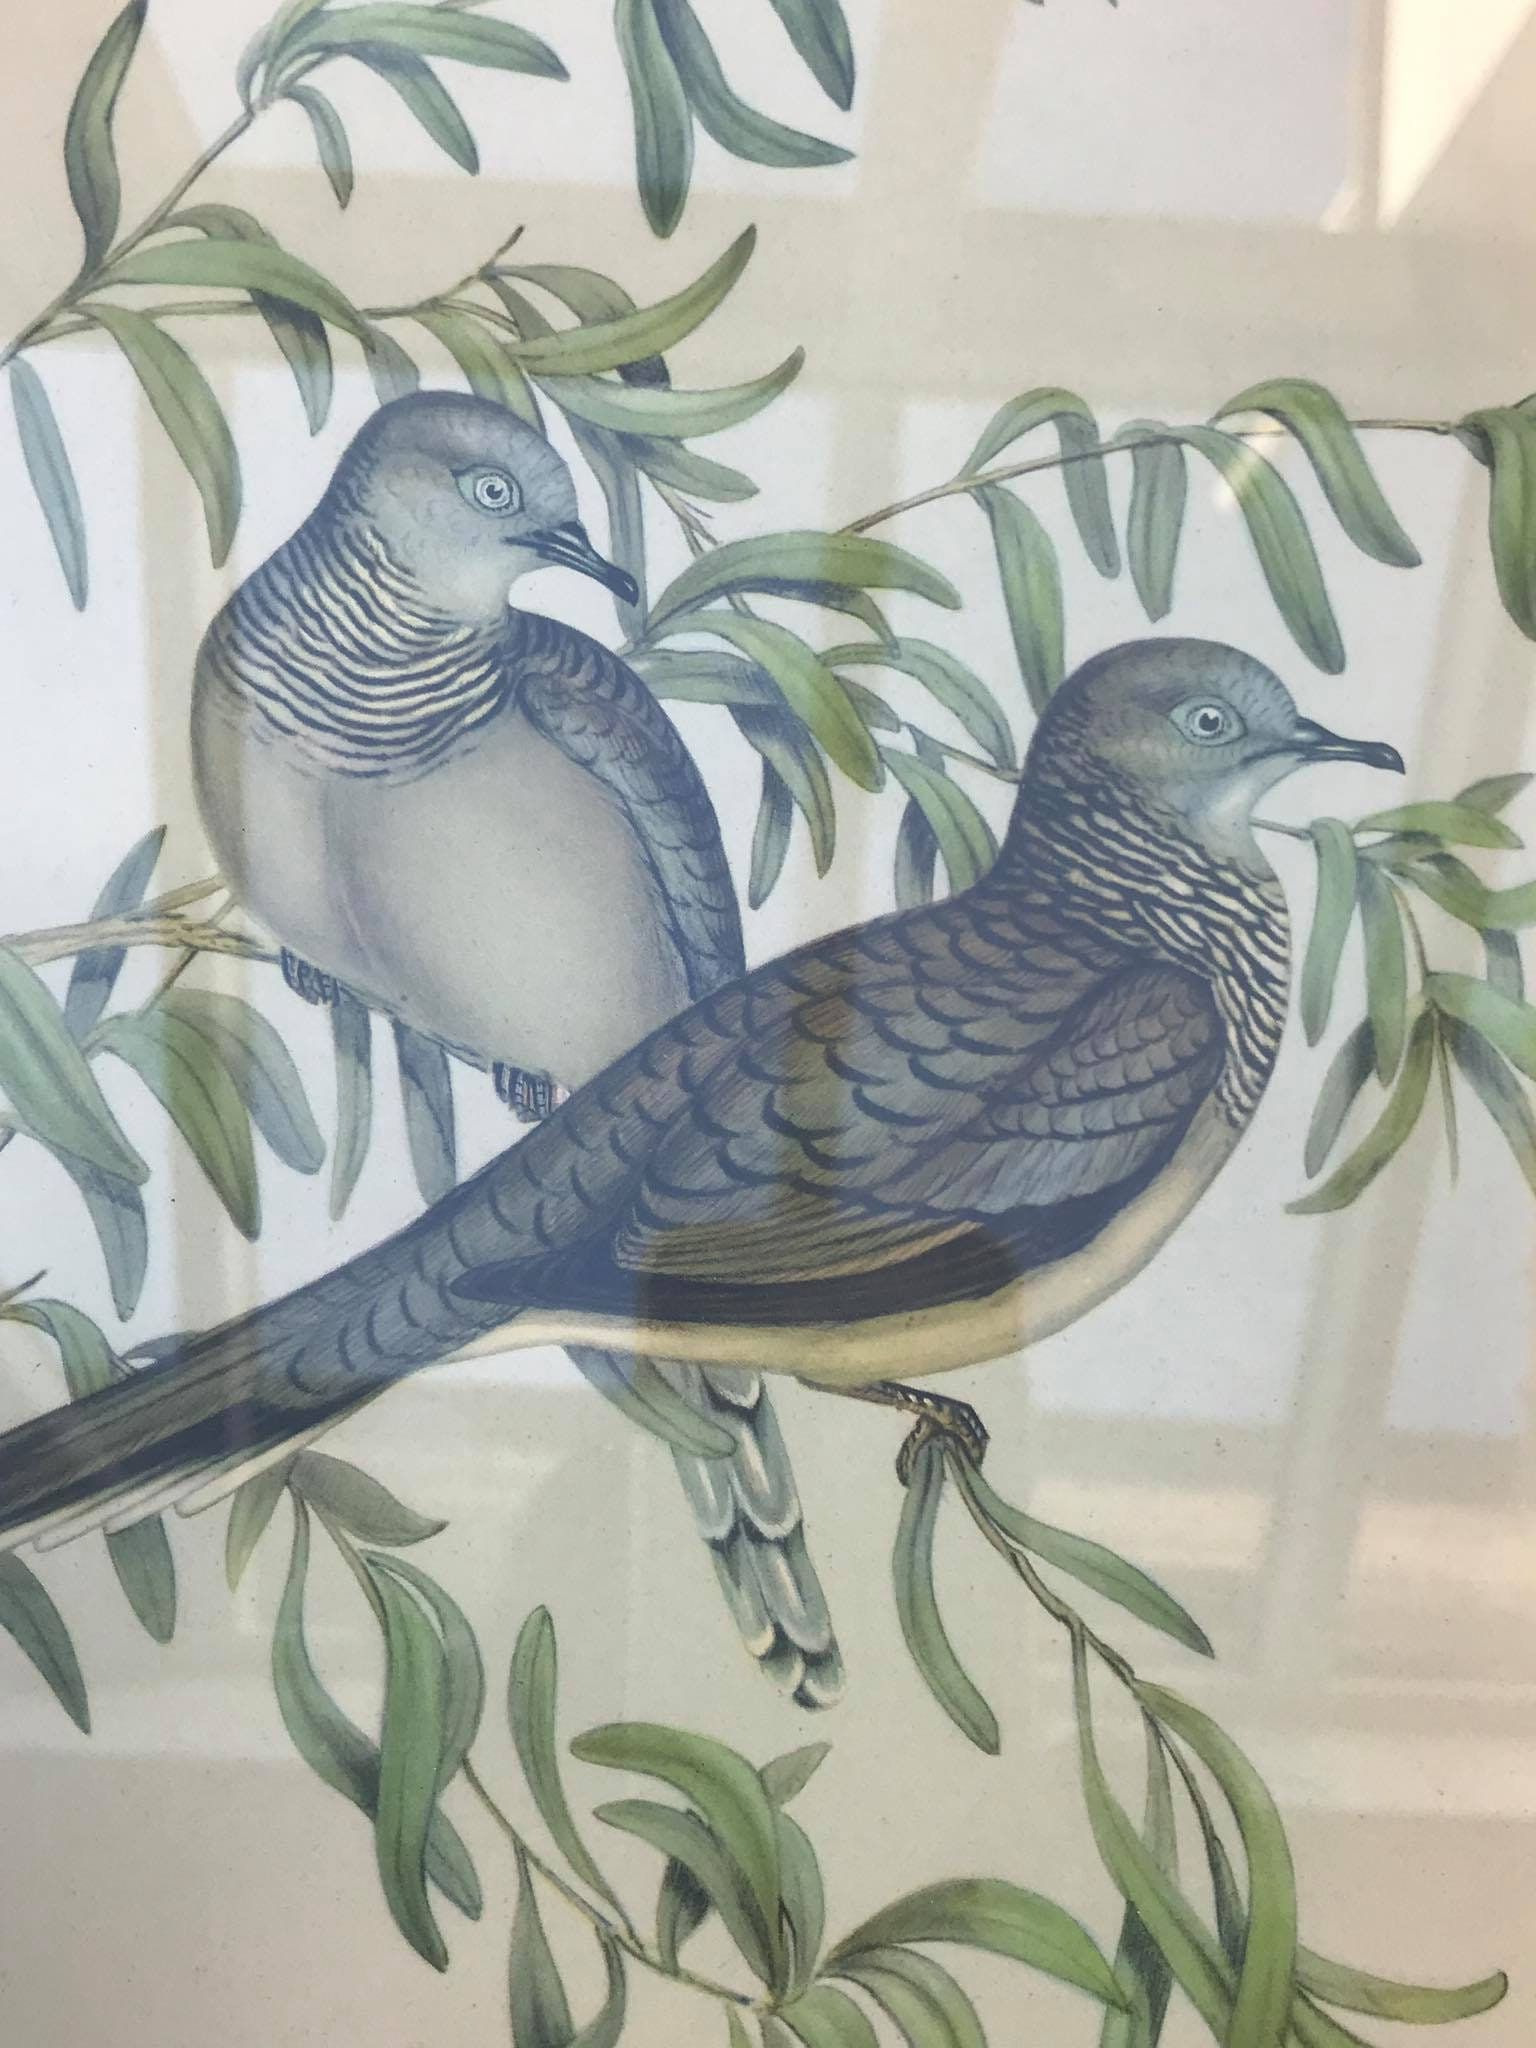 Newest Sunshine Framed Art Prints With Vintage Pair Framed Bird Plants Prints Illustrations (View 18 of 20)